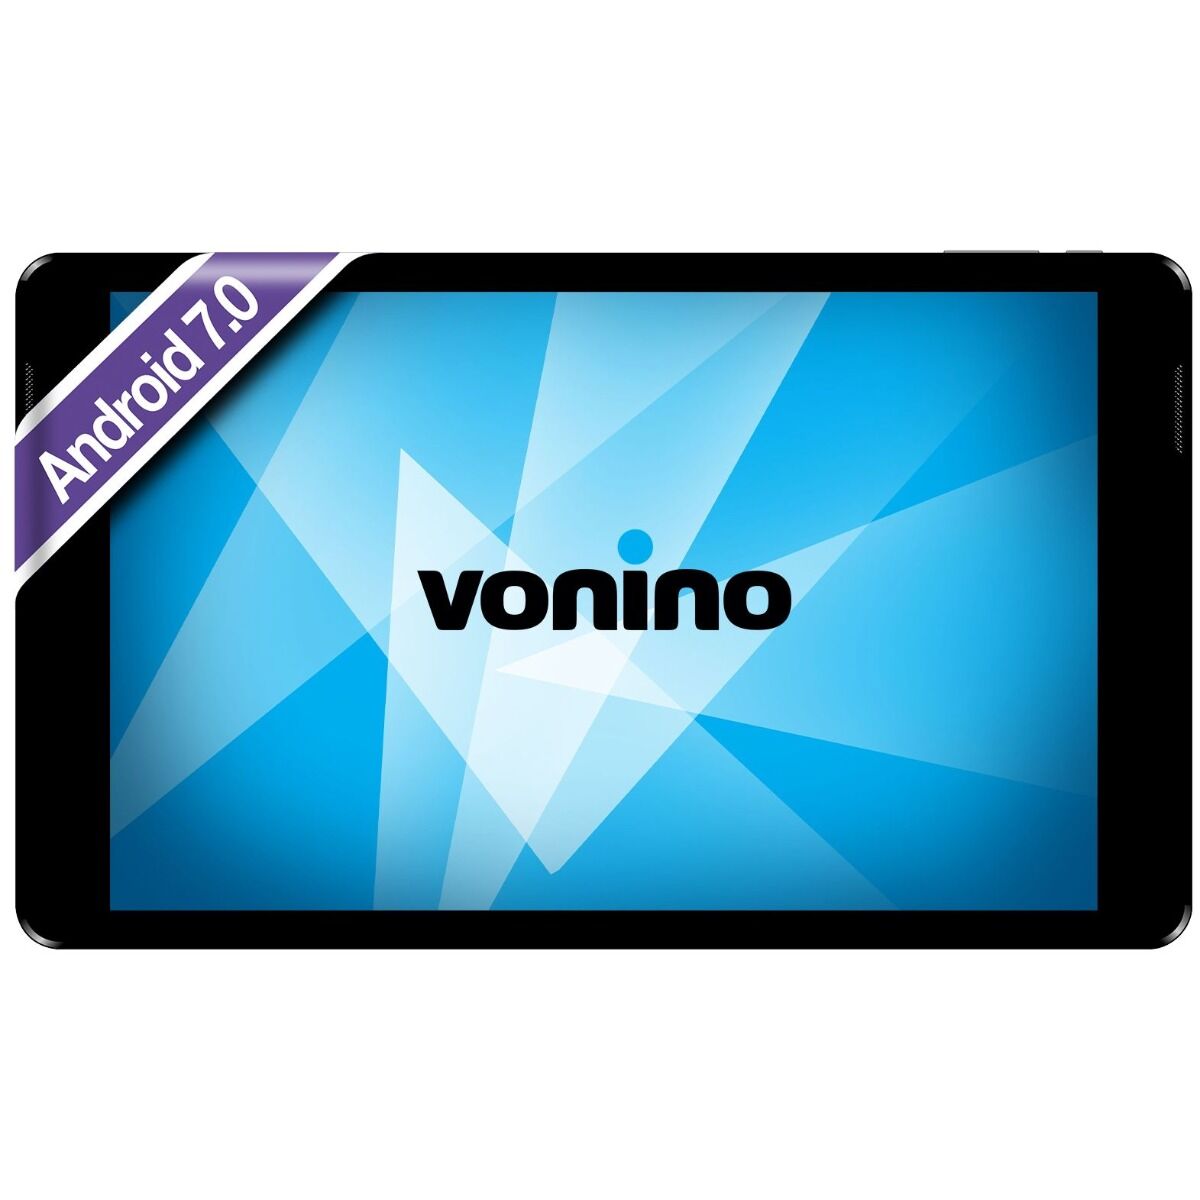 Tableta Vonino Magnet W10, 10.1